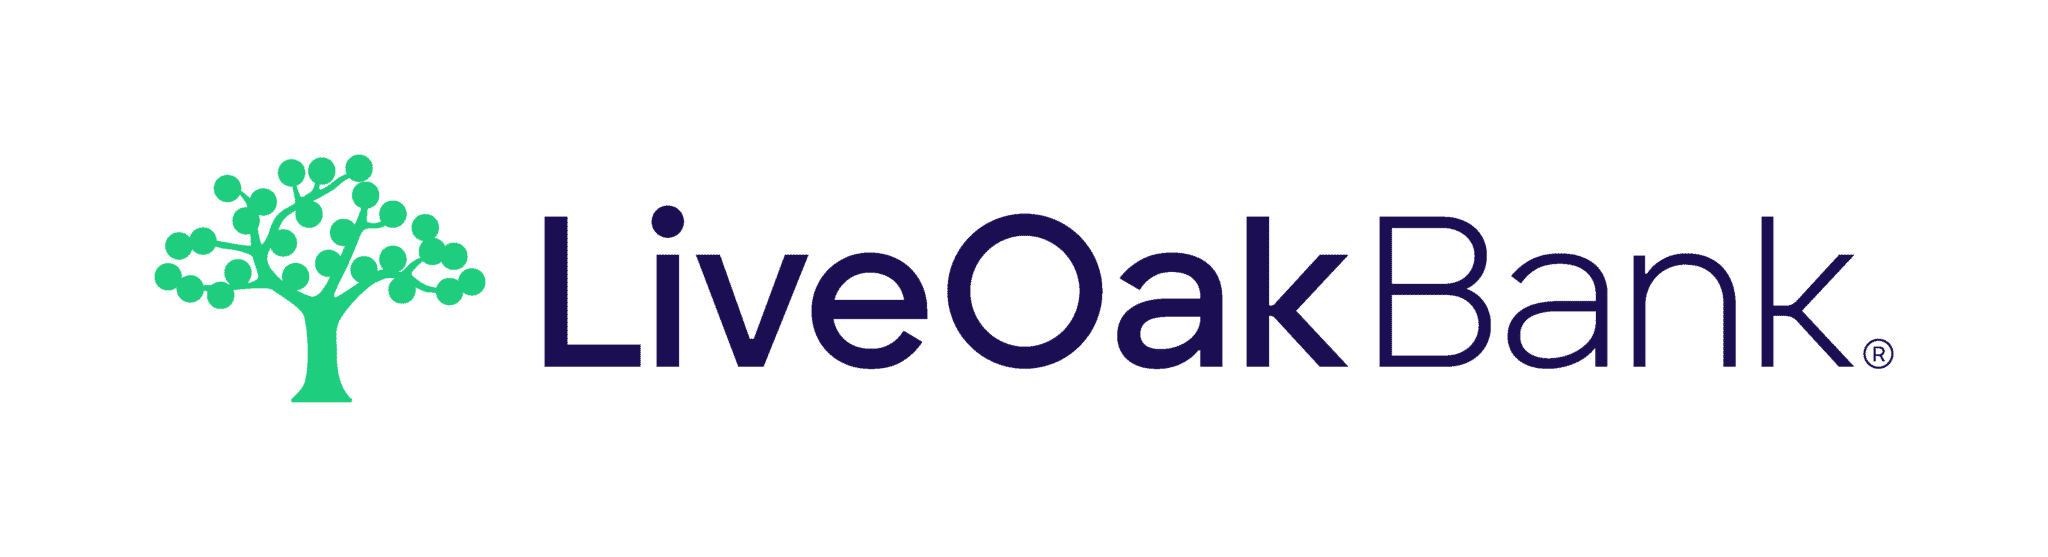 Live Oak Bank 2-Year Business CD